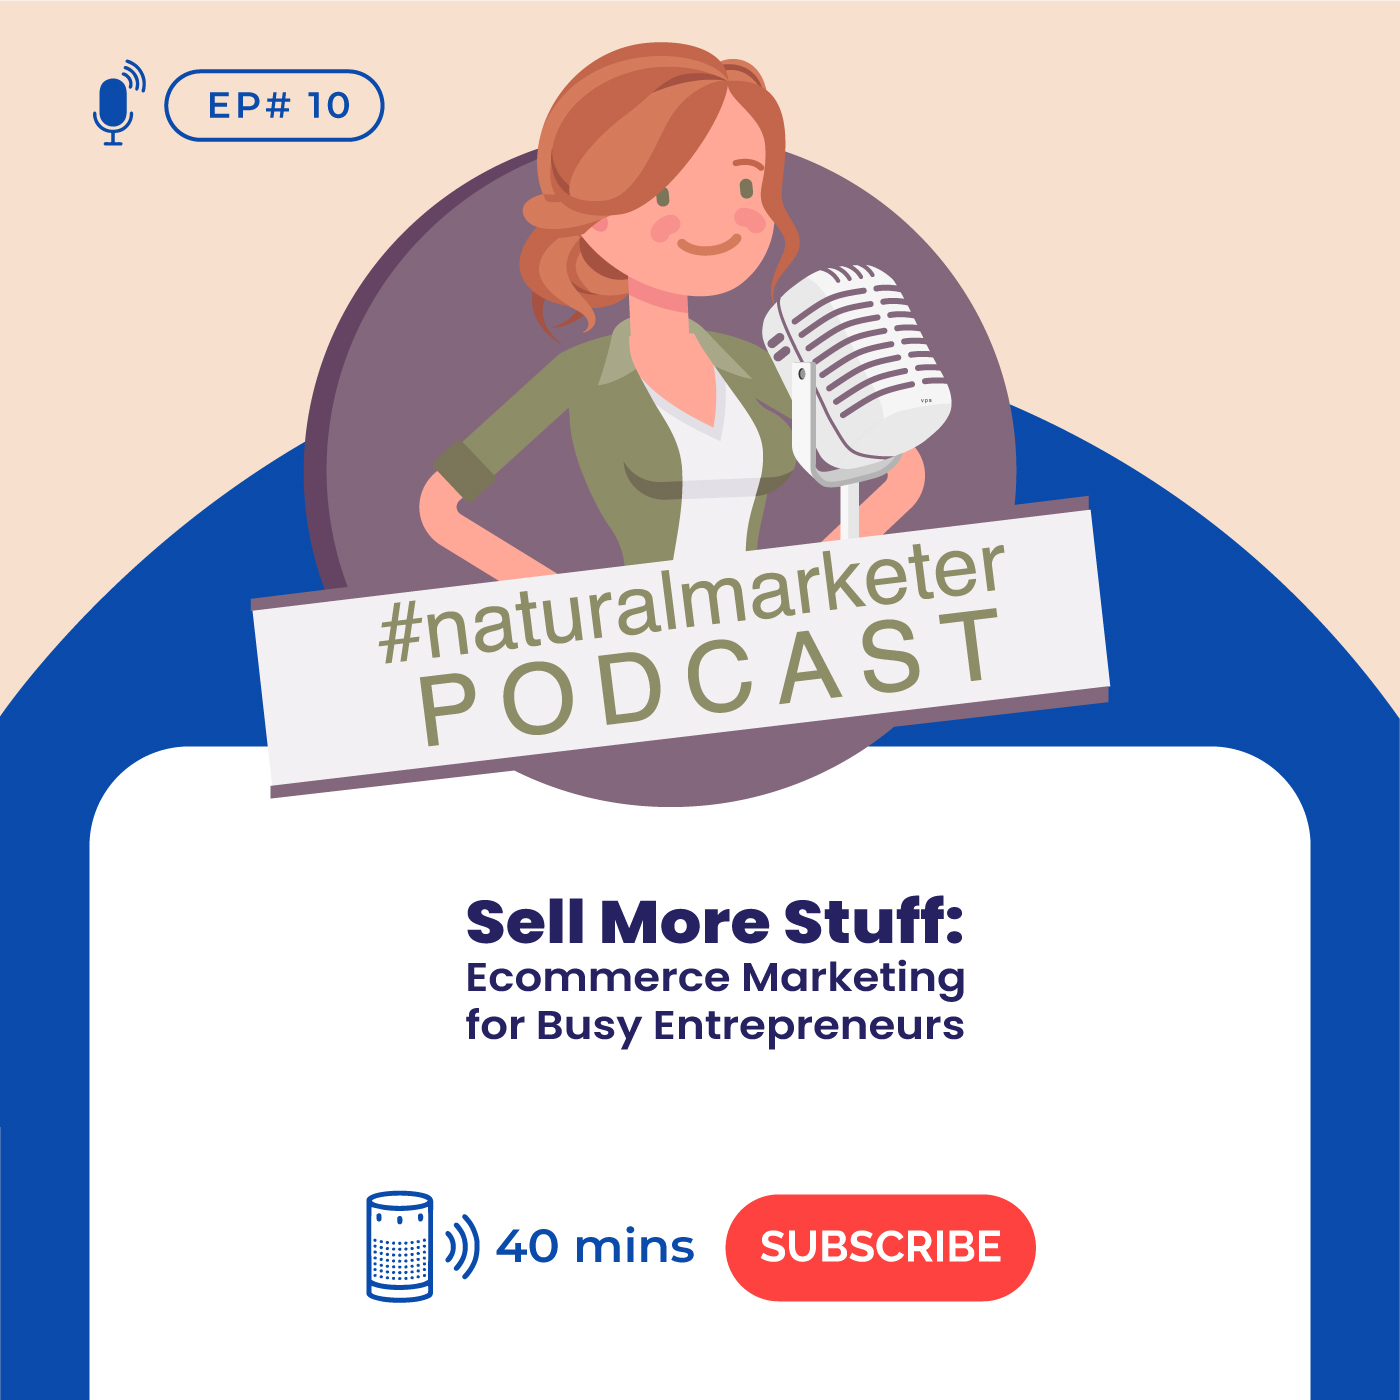 Episode 10: Sell More Stuff: Ecommerce Marketing for Busy Entrepreneurs